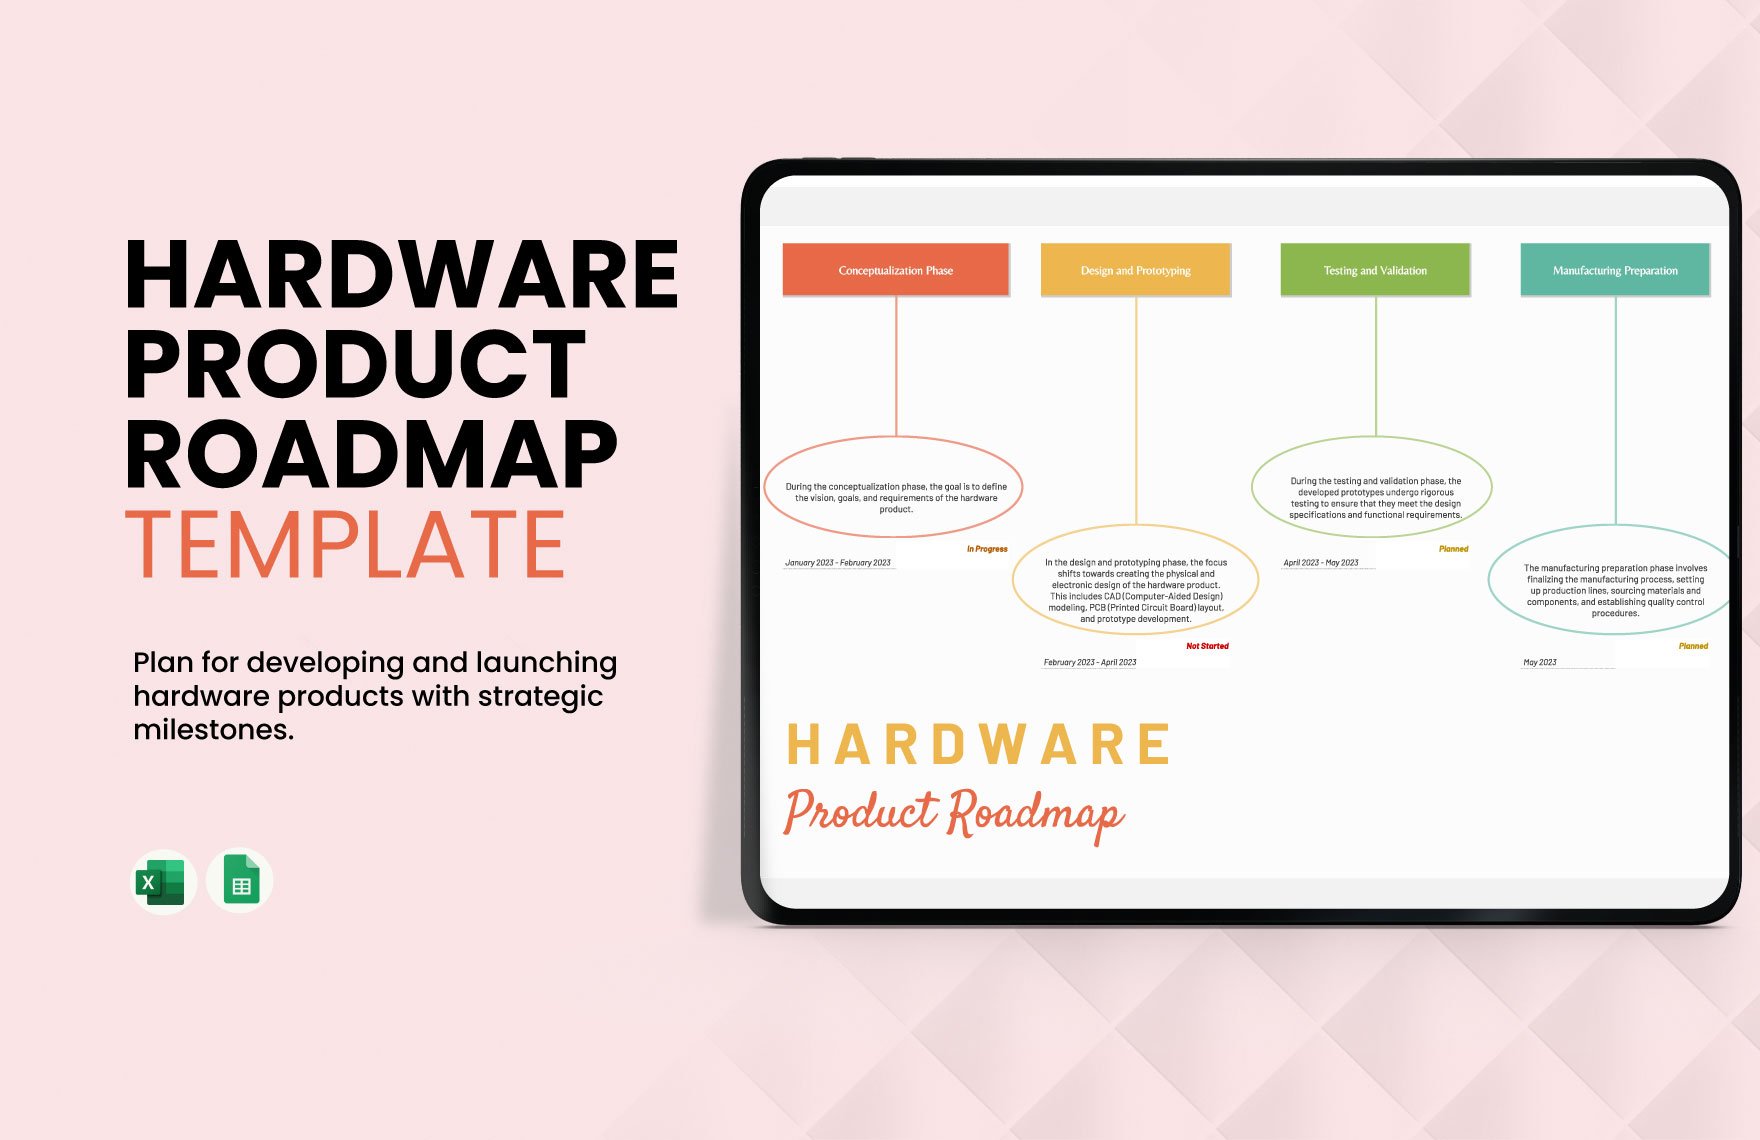 Hardware Product Roadmap Template